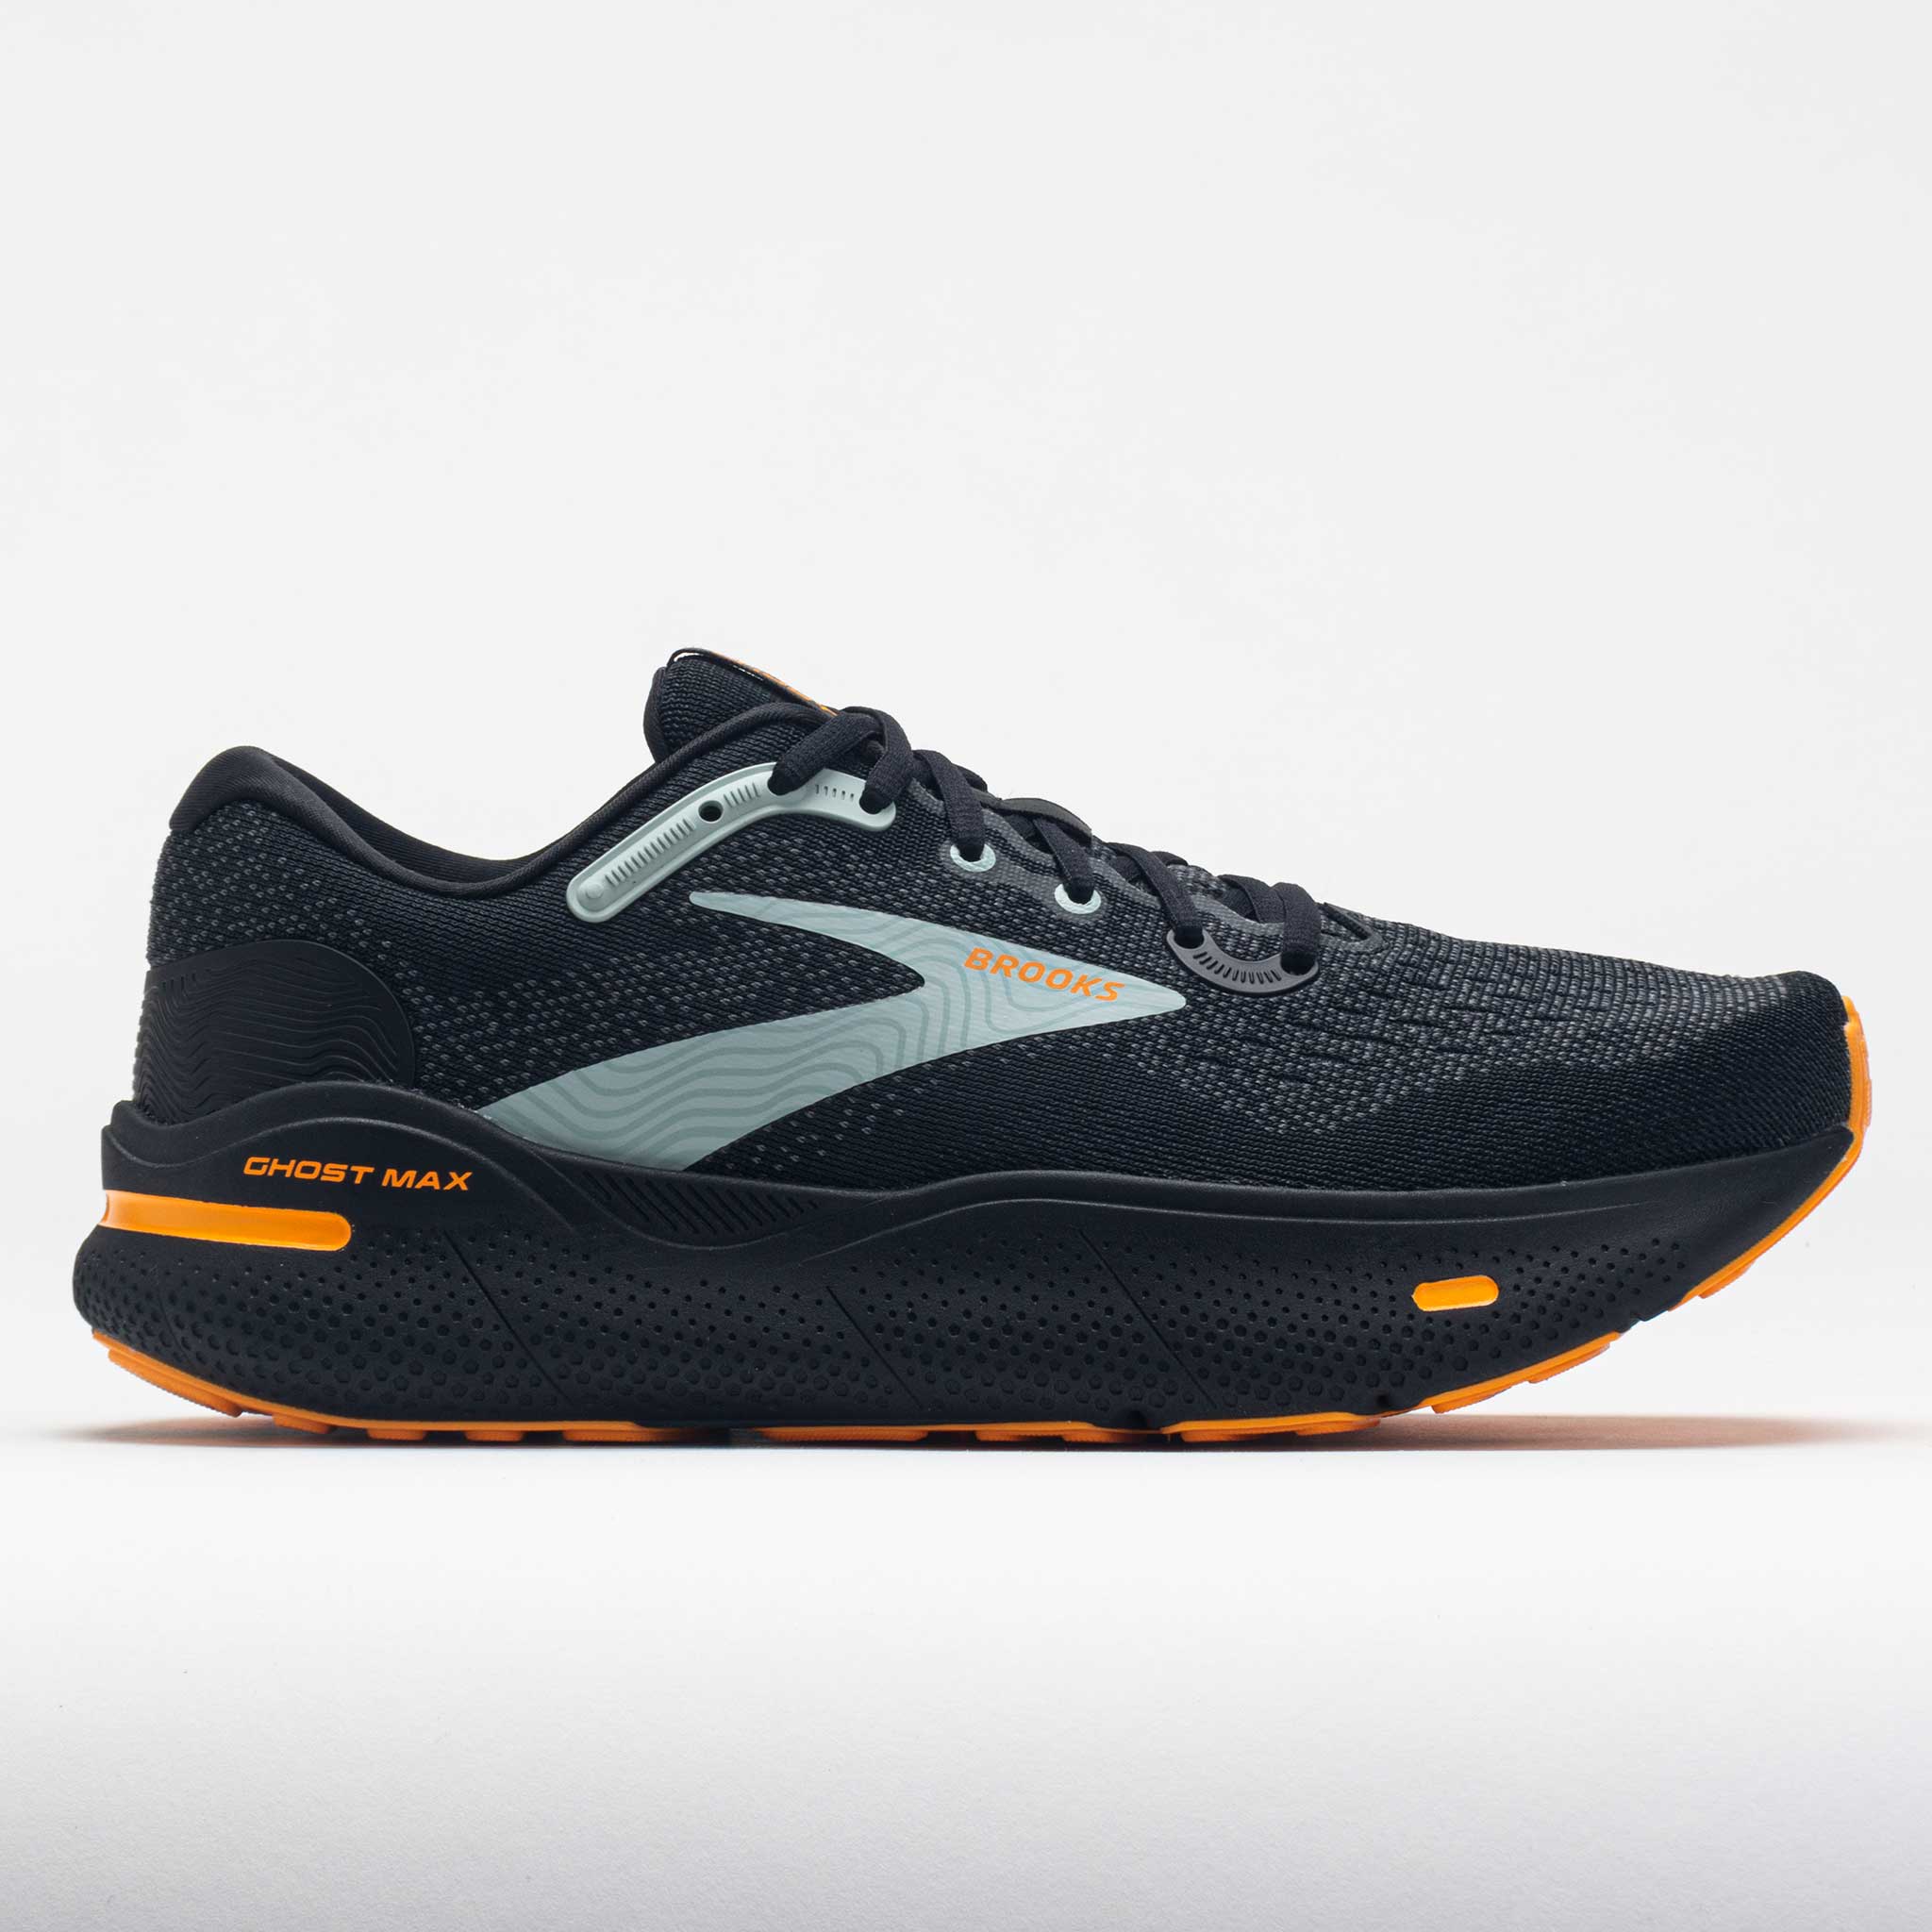 Brooks Ghost Max Men's Running Shoes Black/Orange/Cloud Blue Size 13 Width D - Medium